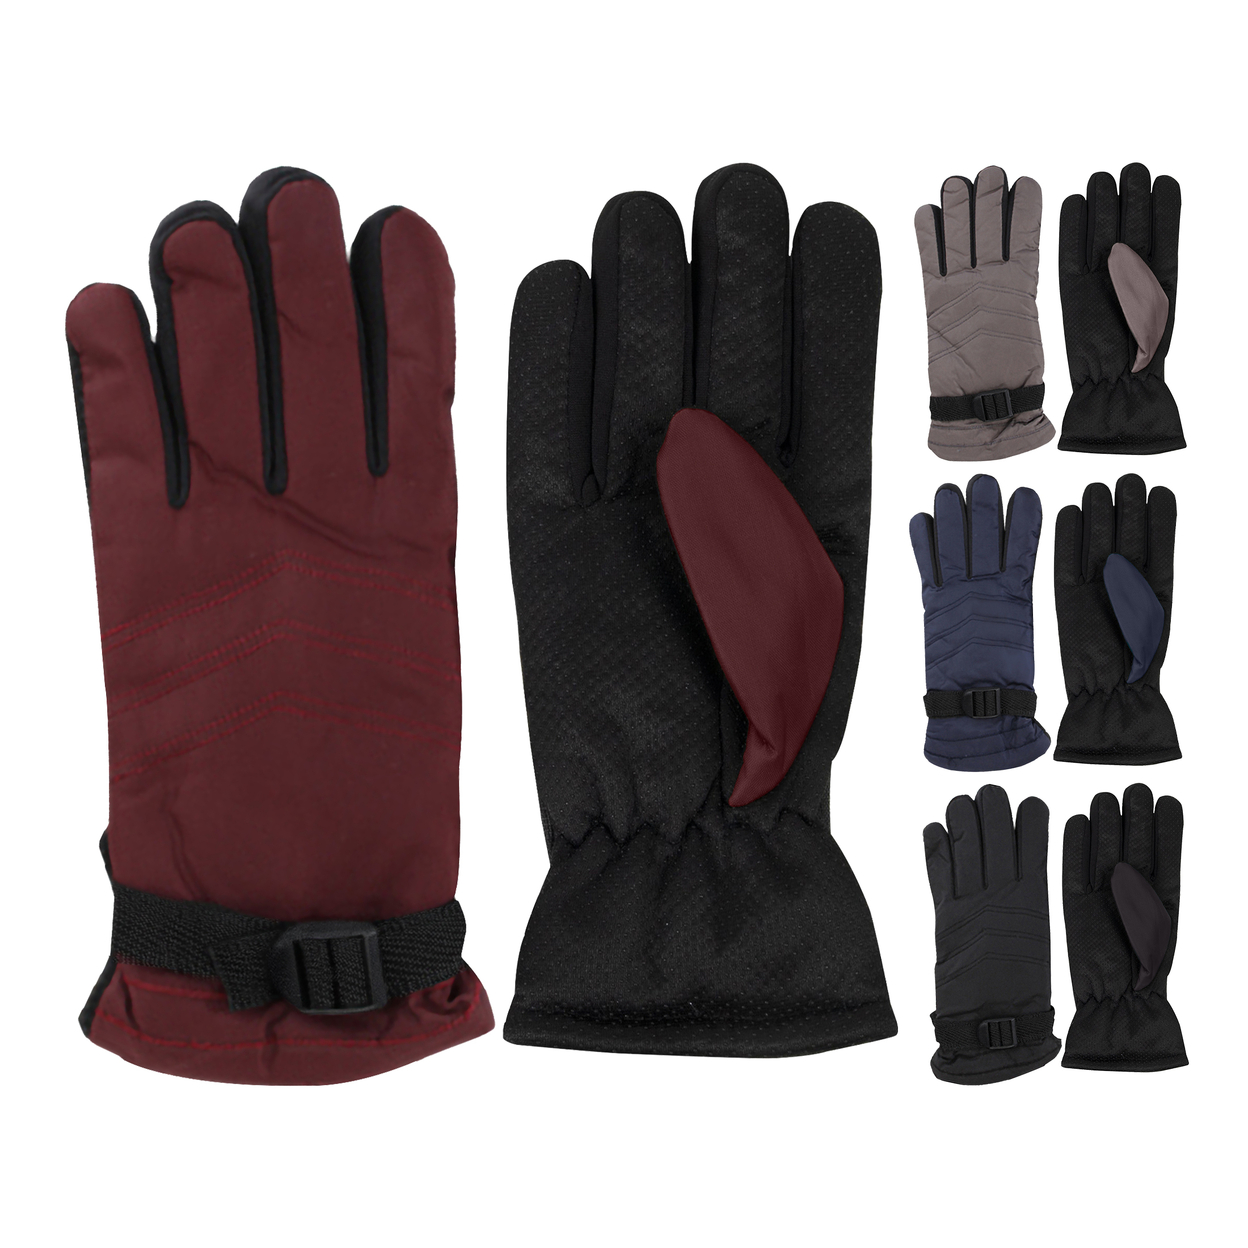 2-Pairs Women's Cozy Fur Lined Snow Ski Warm Winter Gloves - Black/grey